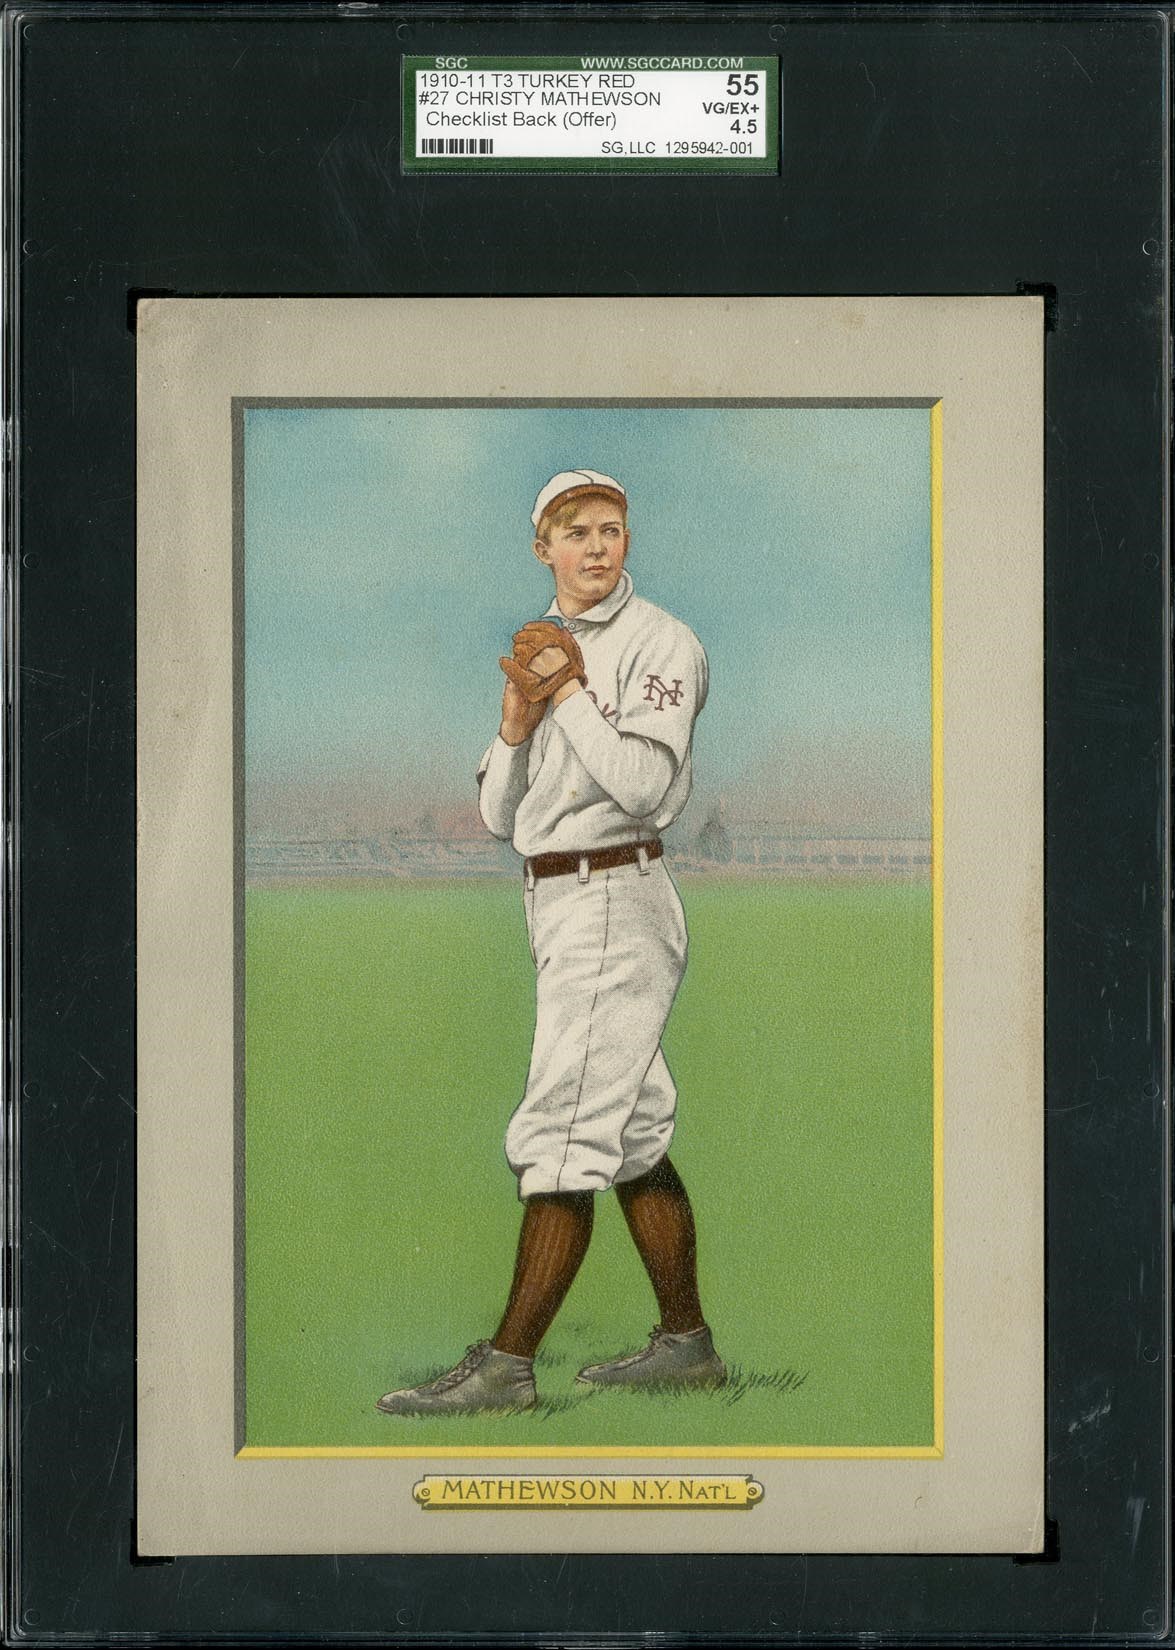 Baseball and Trading Cards - 1910-11 T3 Turkey Red Christy Mathewson - SGC 55 VG/EX+ 4.5